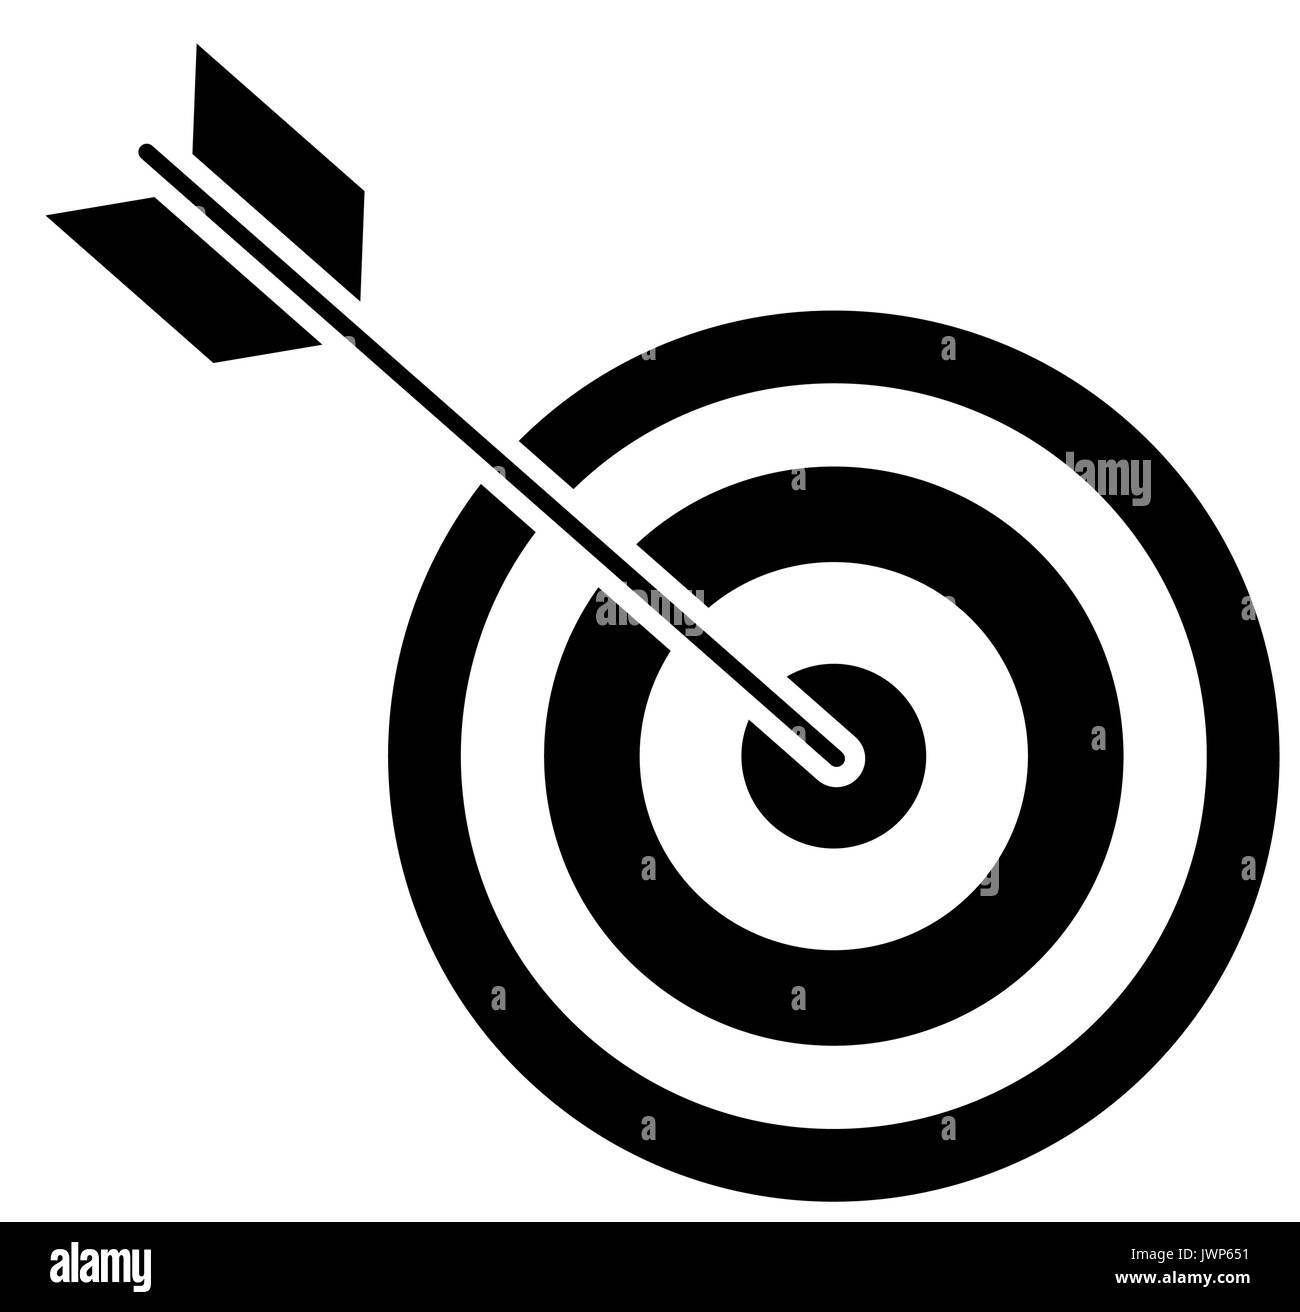 Target Dartscheibe Symbol Symbol Vektor Illustration Grafik-design  Stock-Vektorgrafik - Alamy